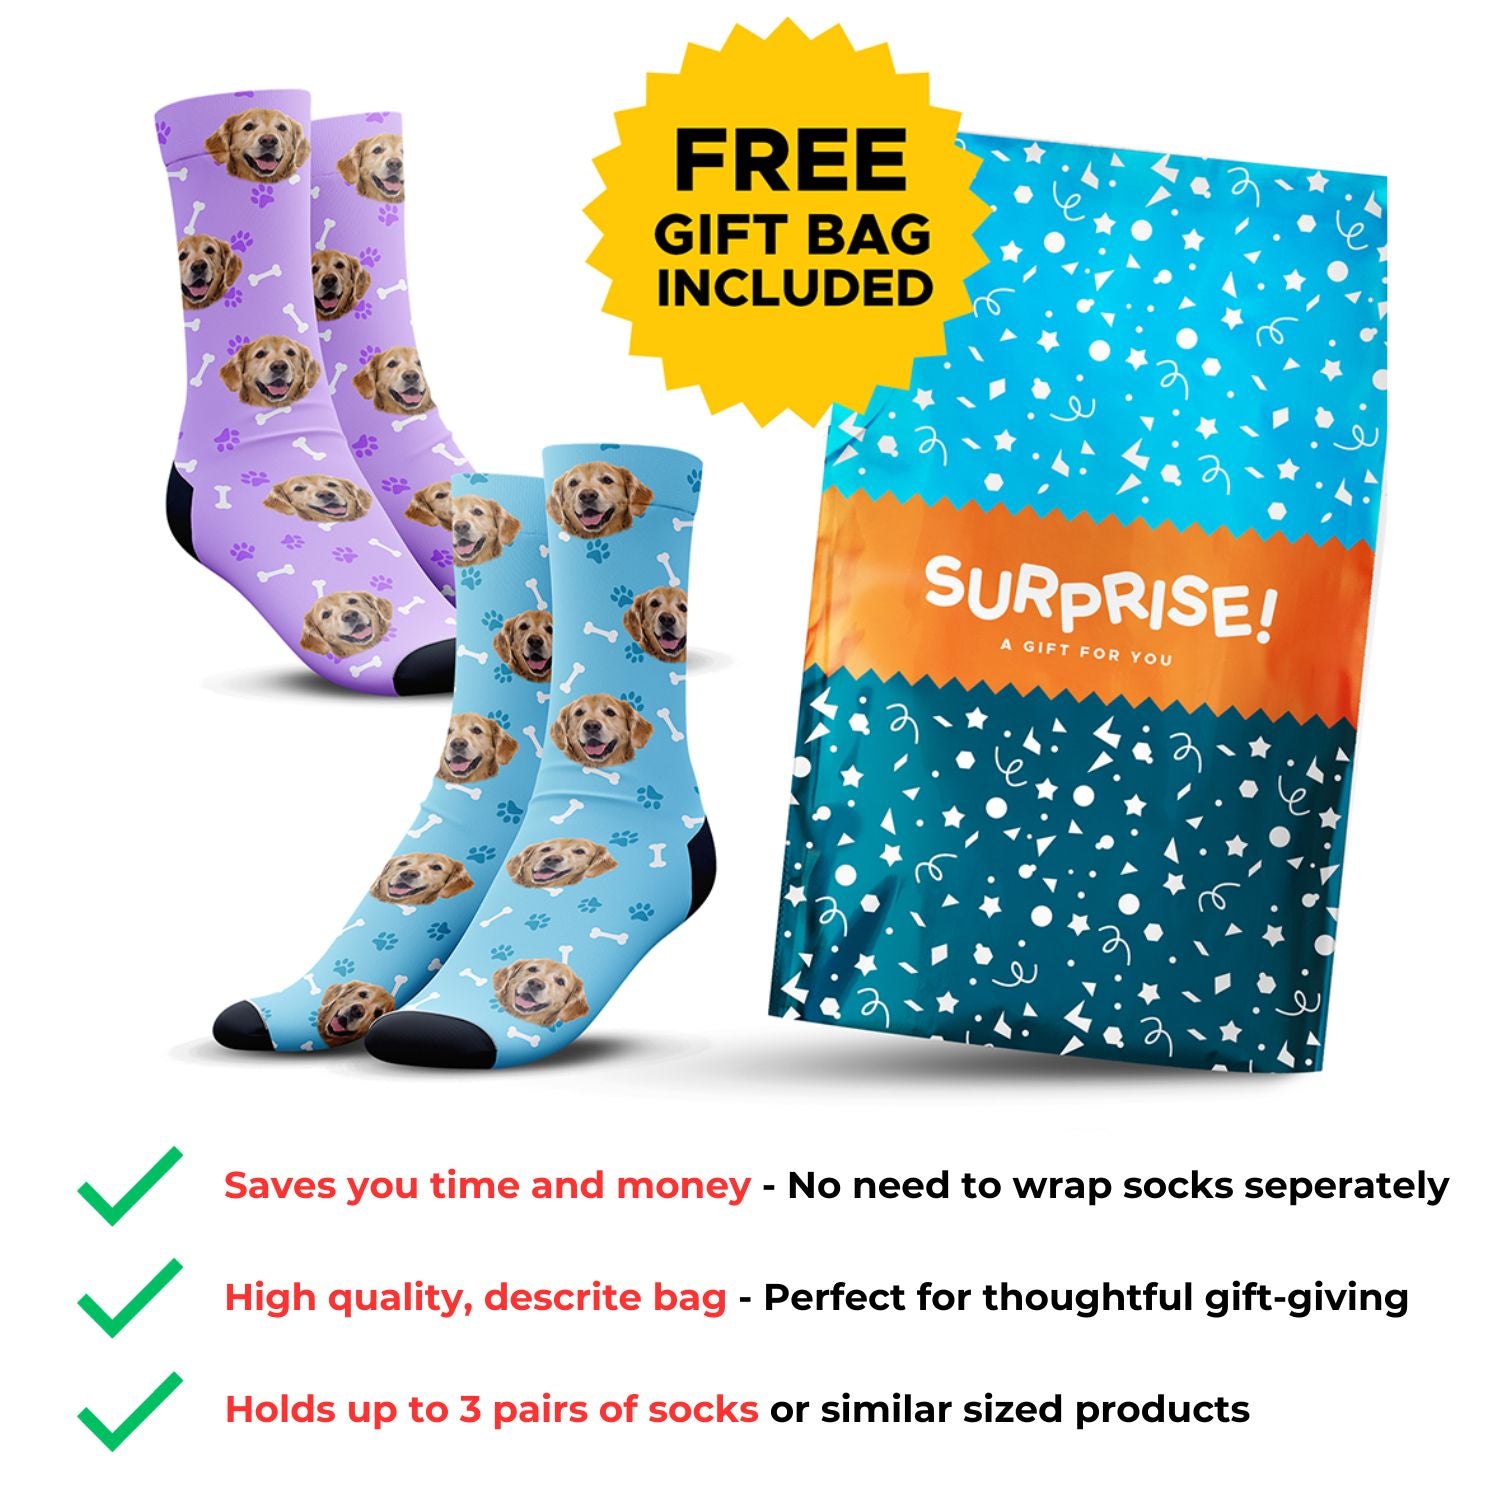 Custom Gingerbread Socks - 100% Free, Limit 1 Per Customer